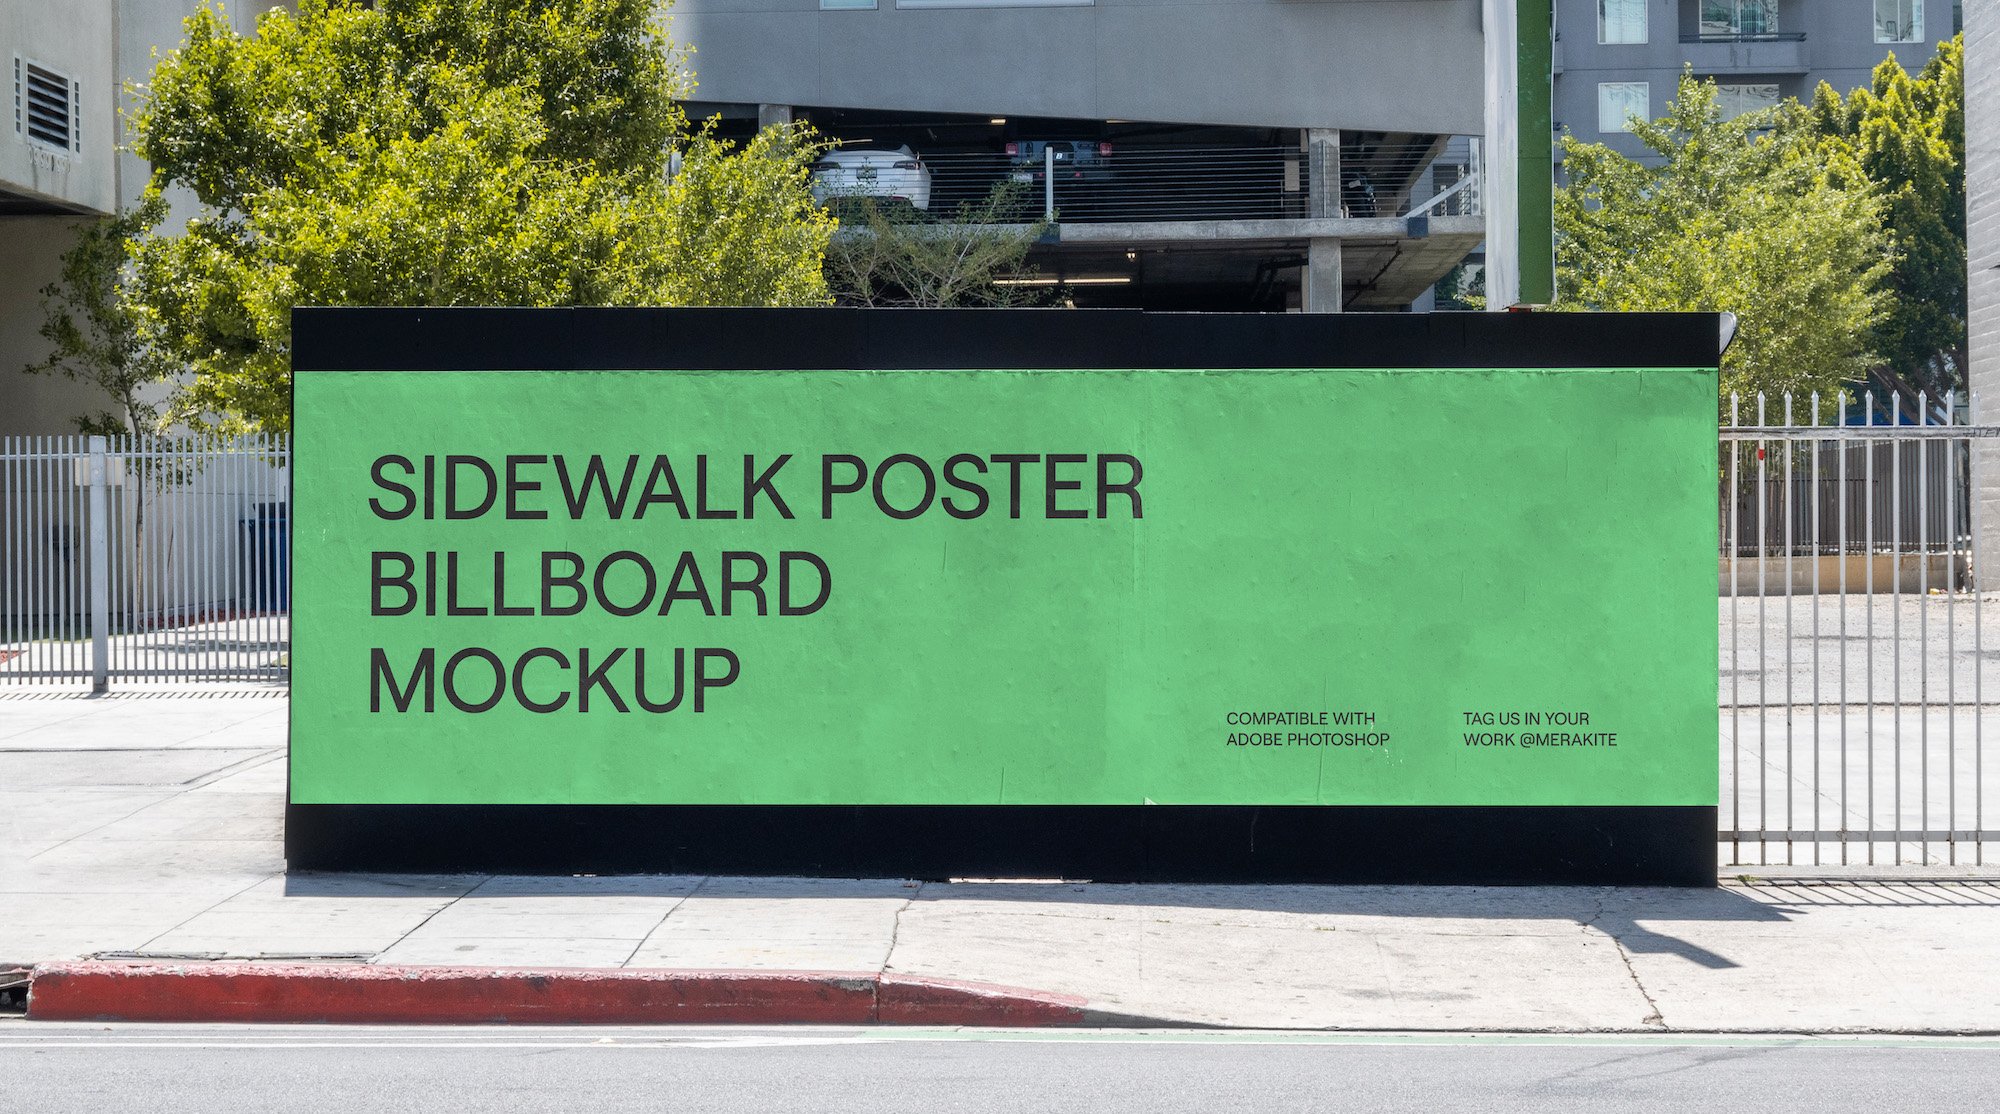 Urban Sidewalk Billboard Mockup PSD cover image.